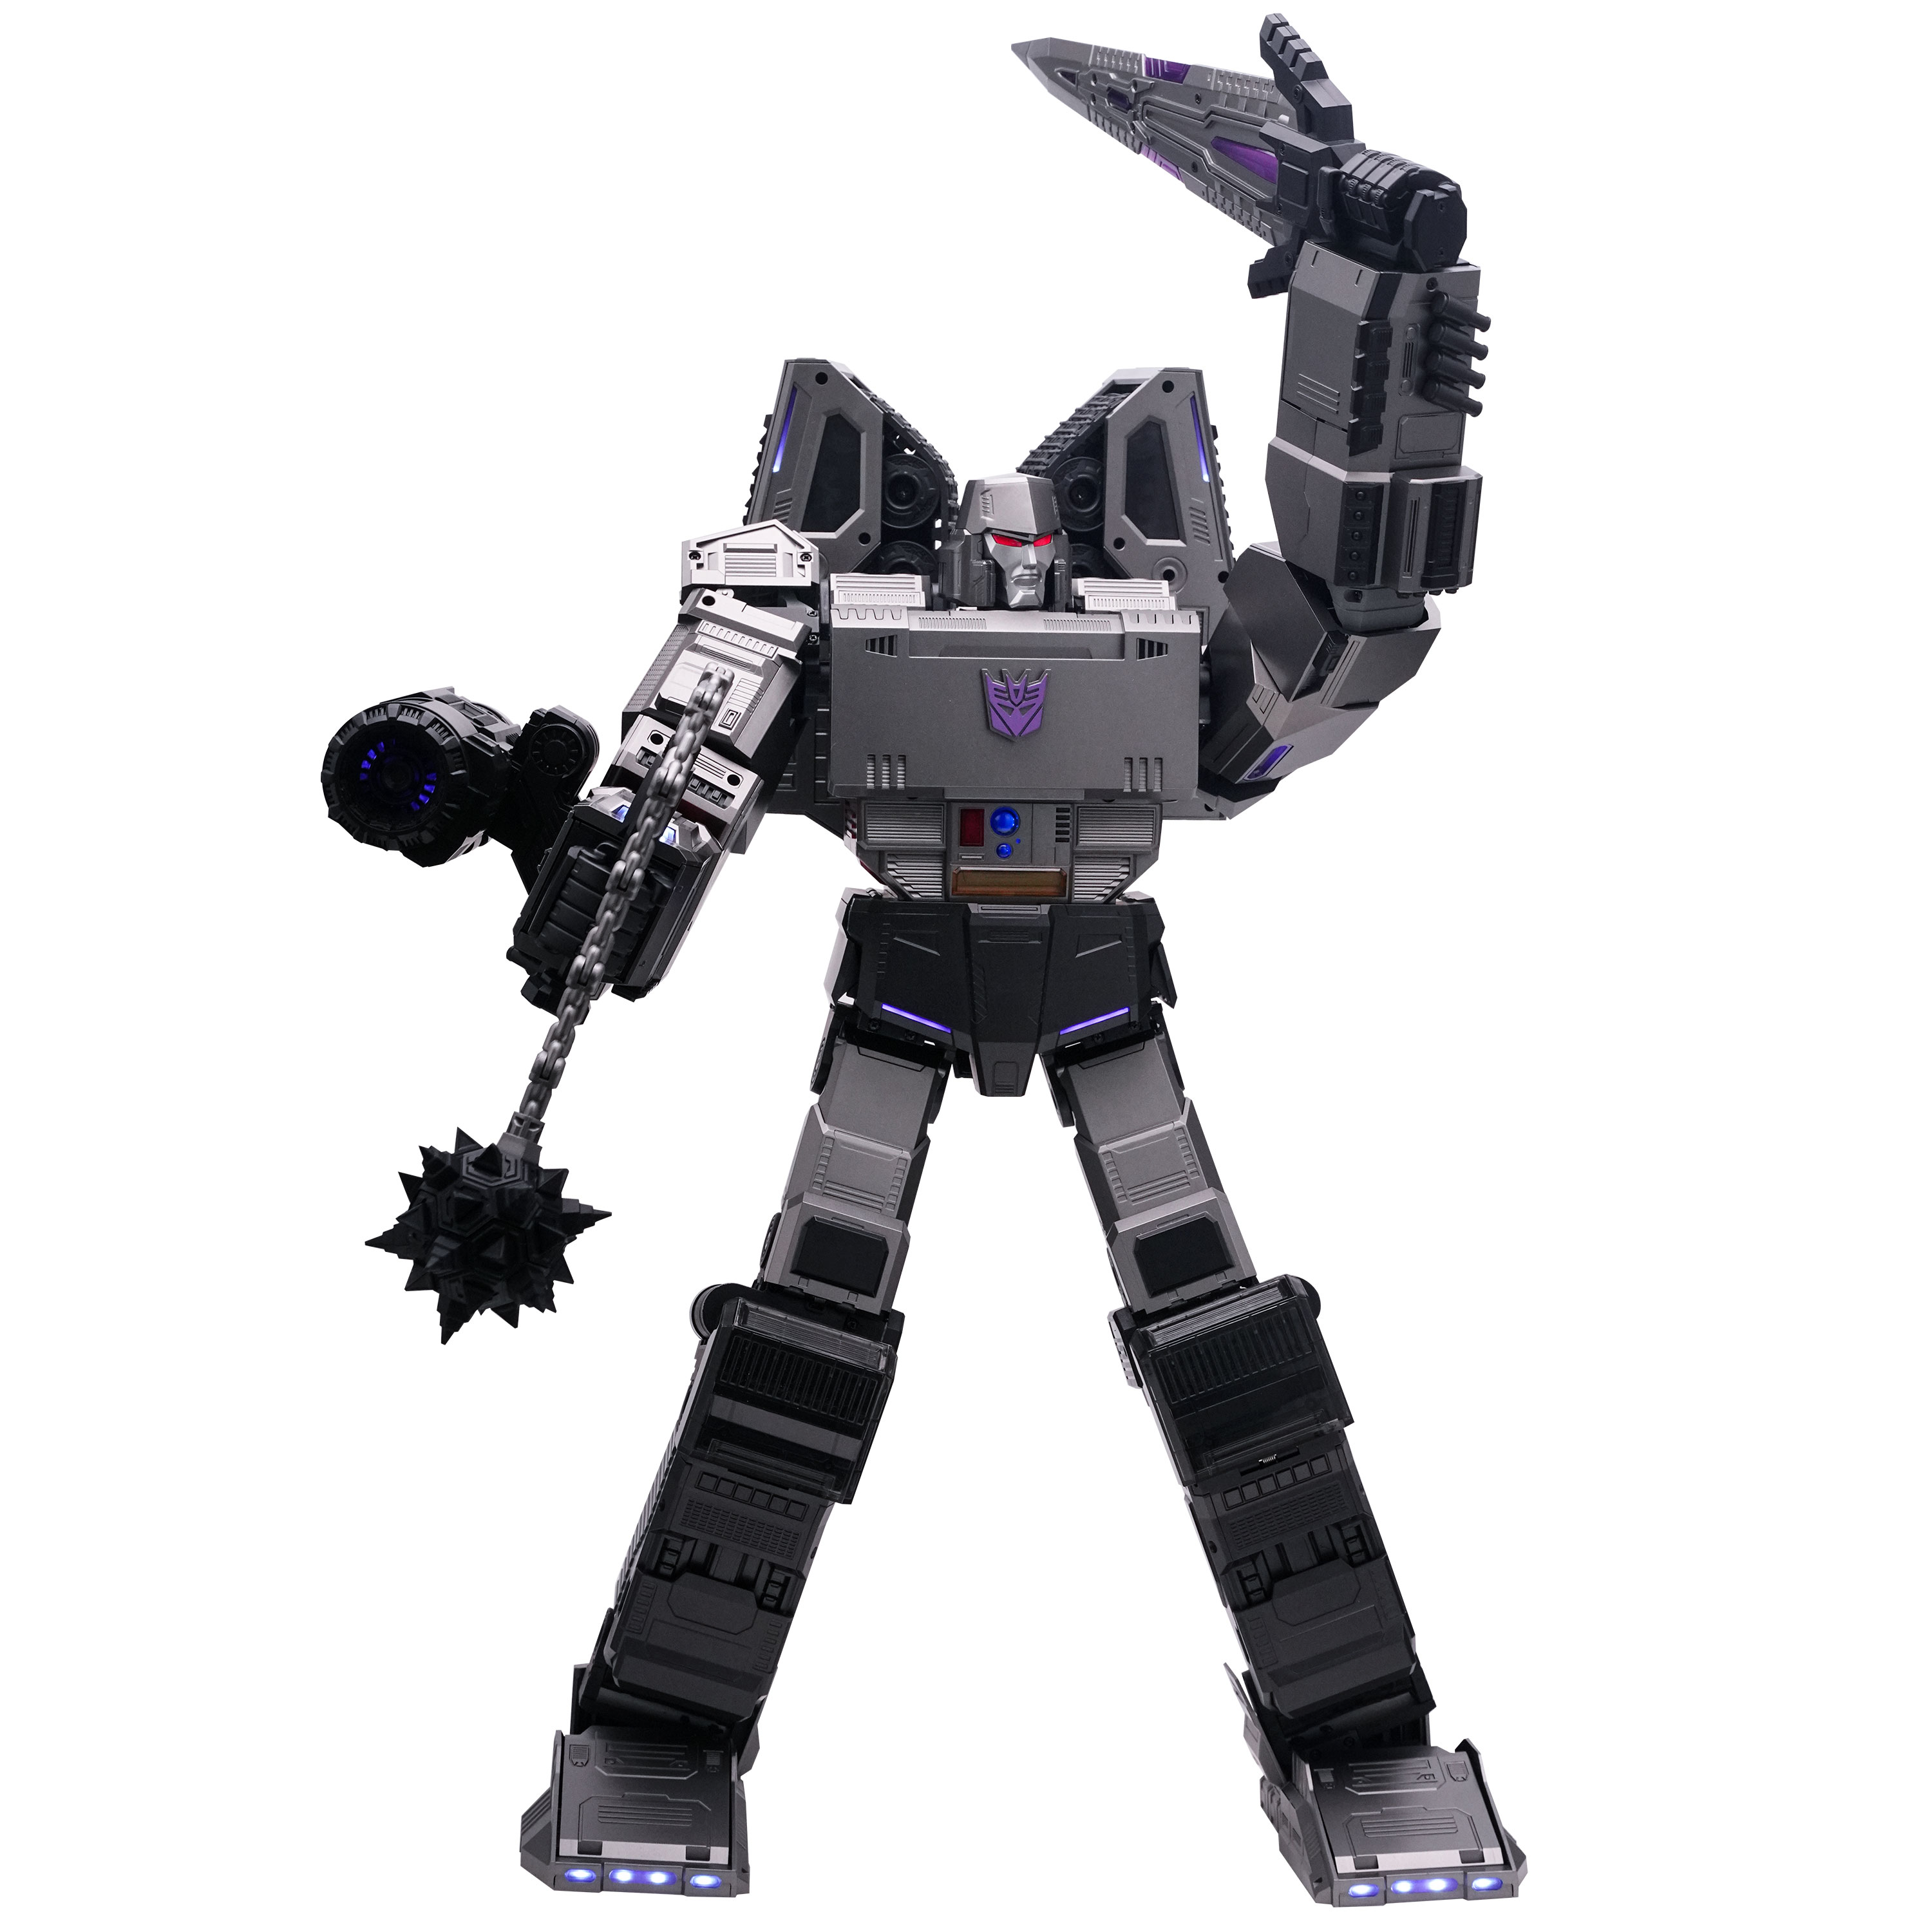 Megatron product image (Hasbro/Robosen)